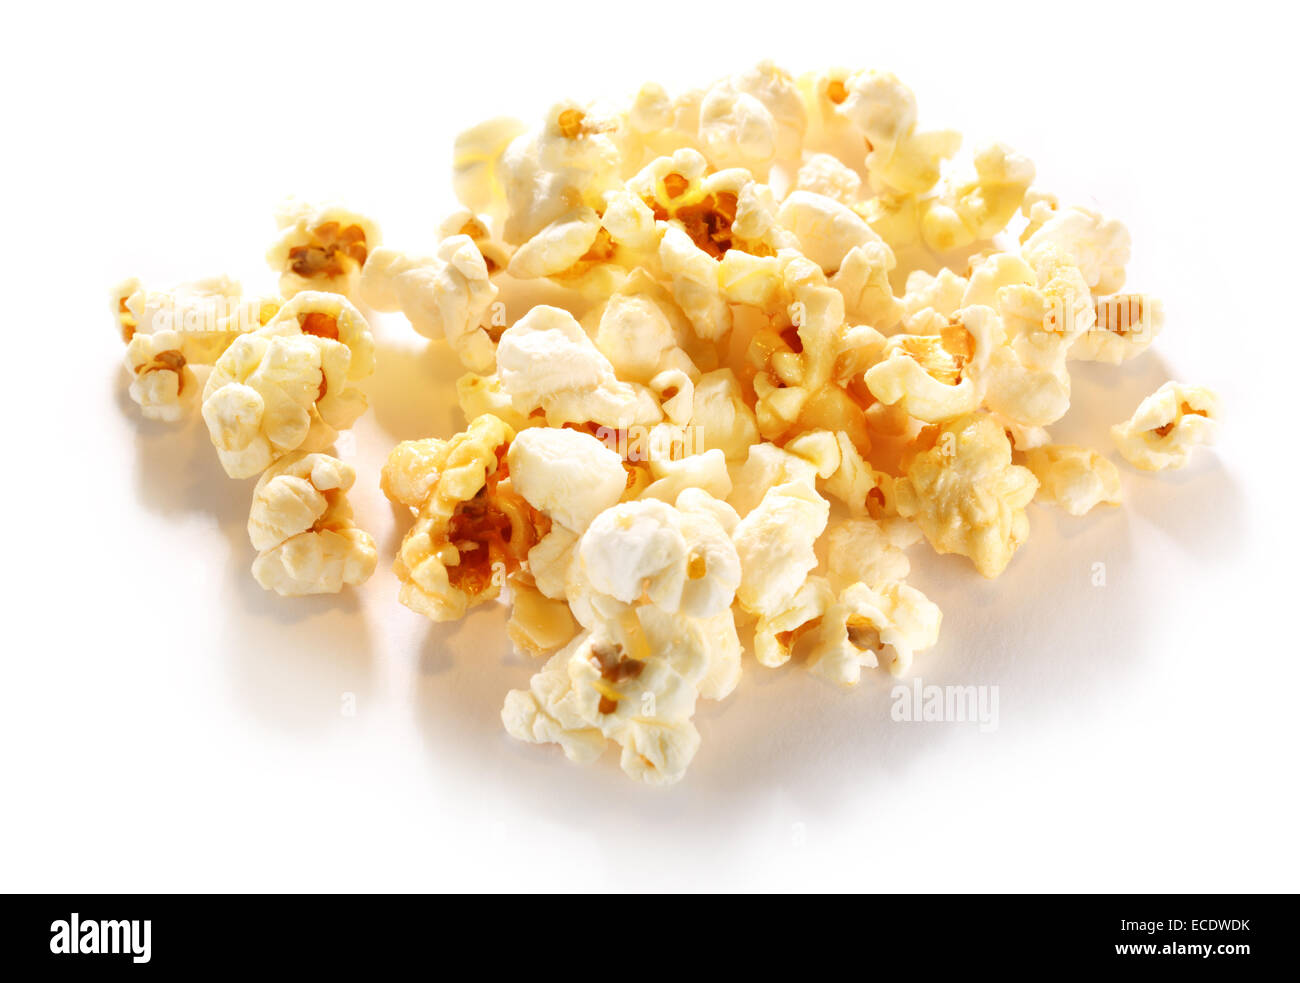 Popcorn on the white background Stock Photo